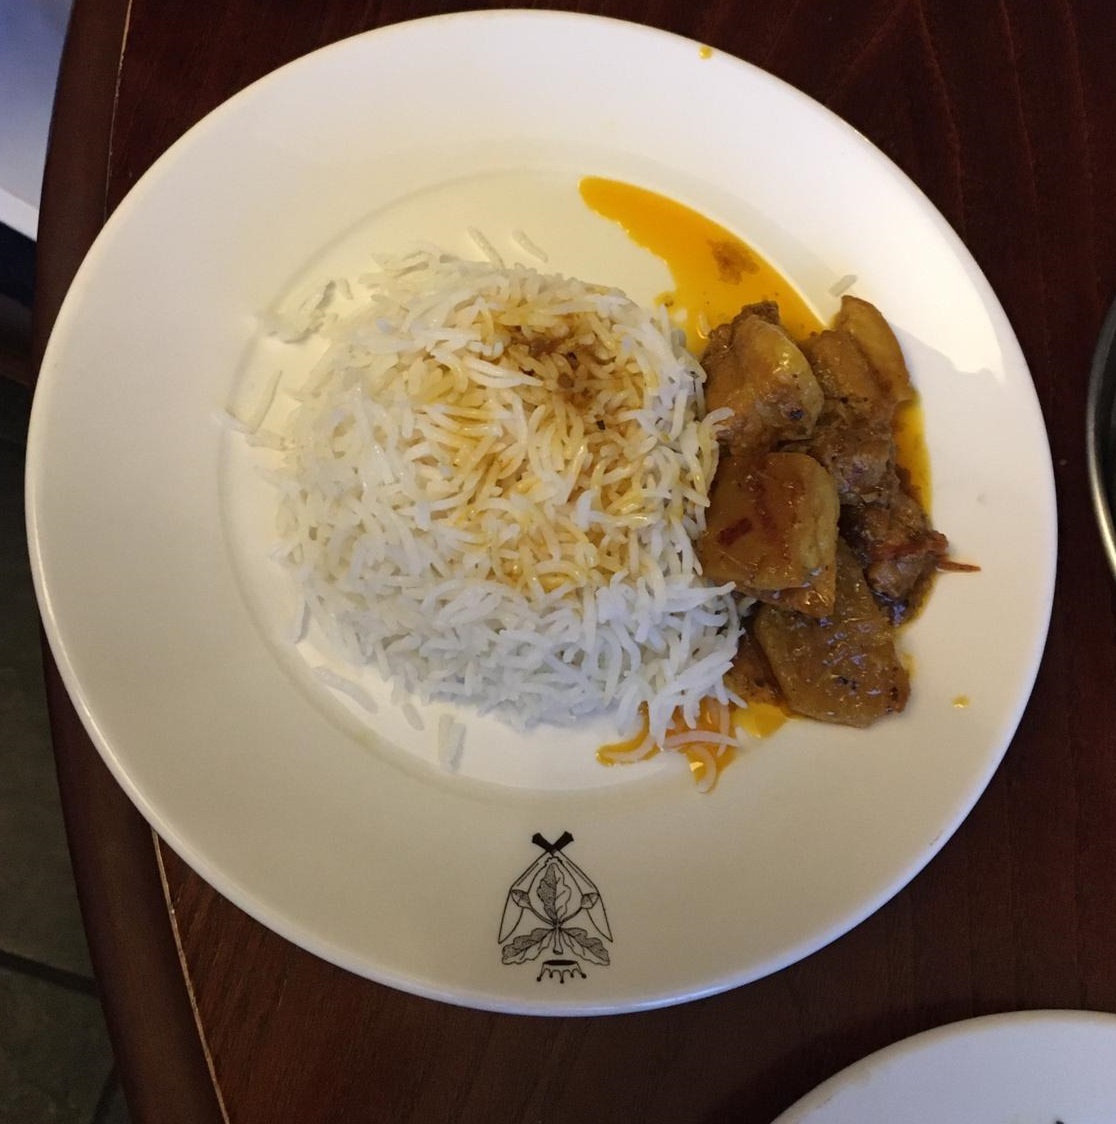 The Gurkha curry 